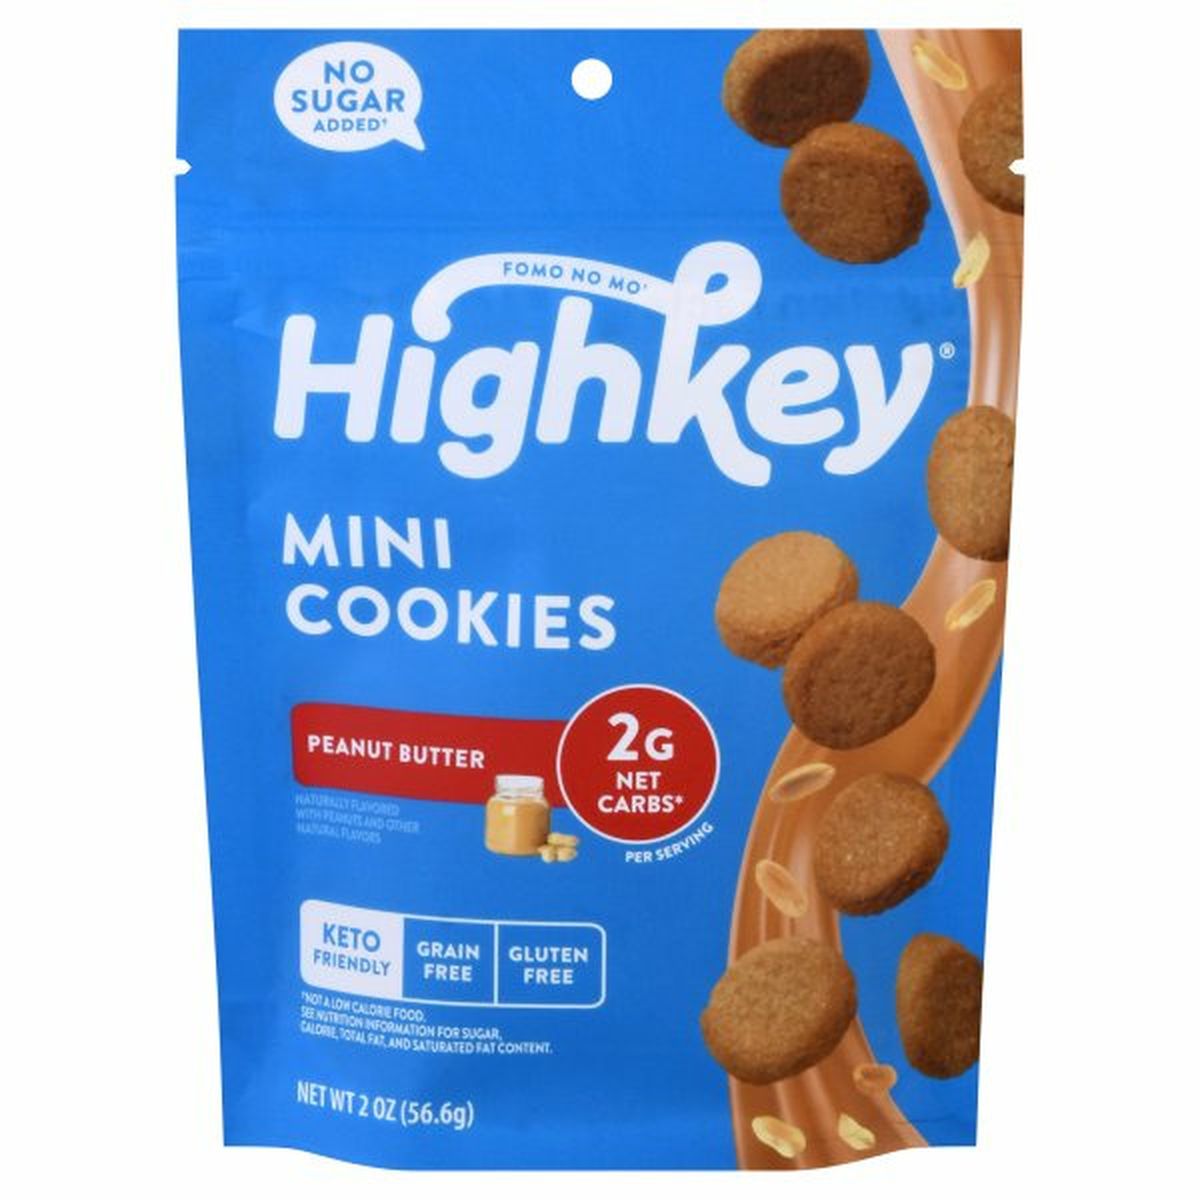 Calories in Highkey Cookies, Peanut Butter, Mini